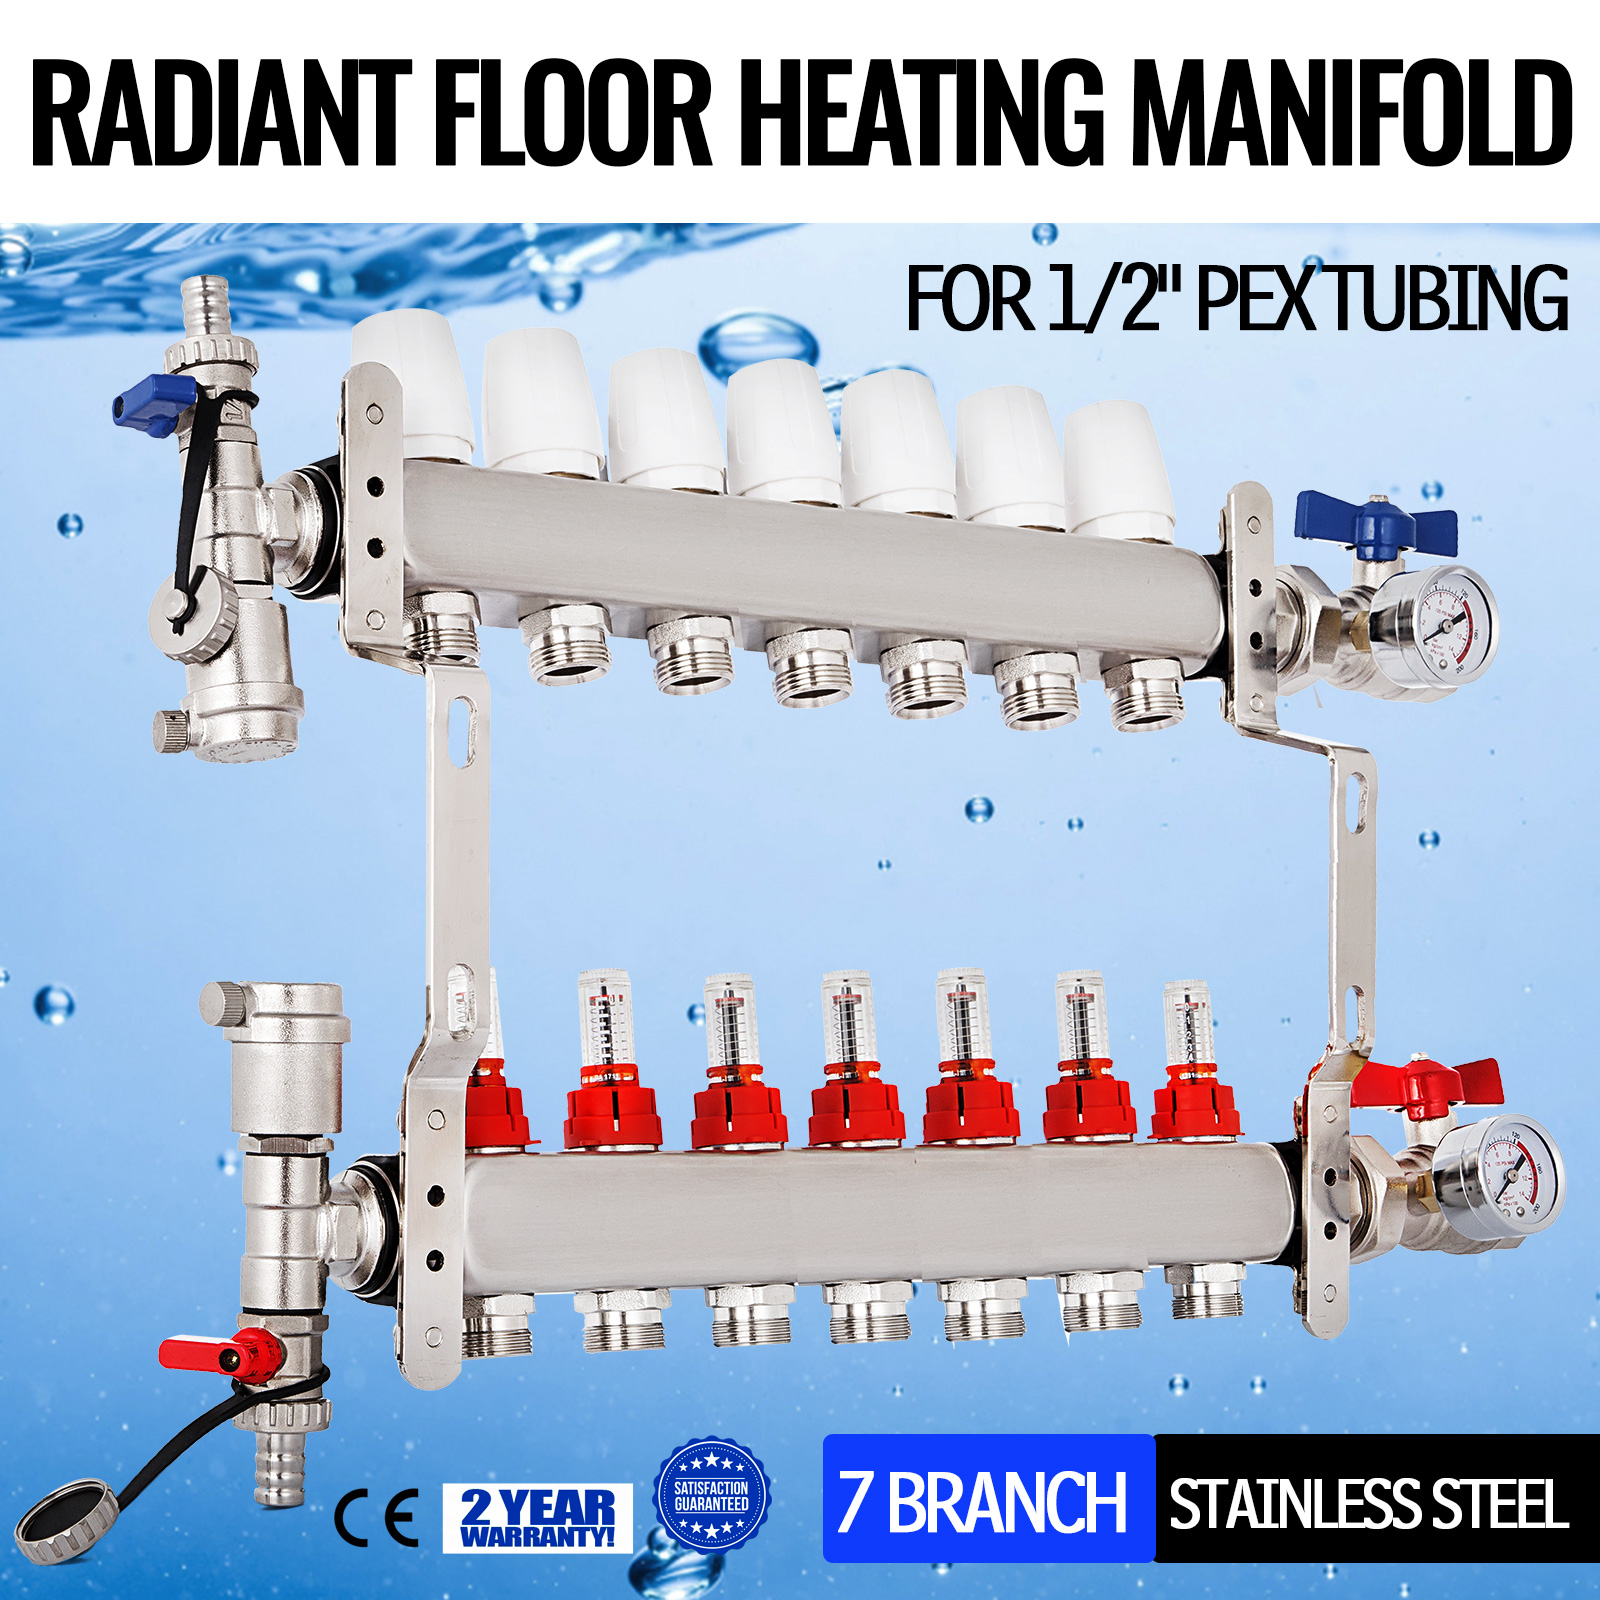 radiant heating manifold